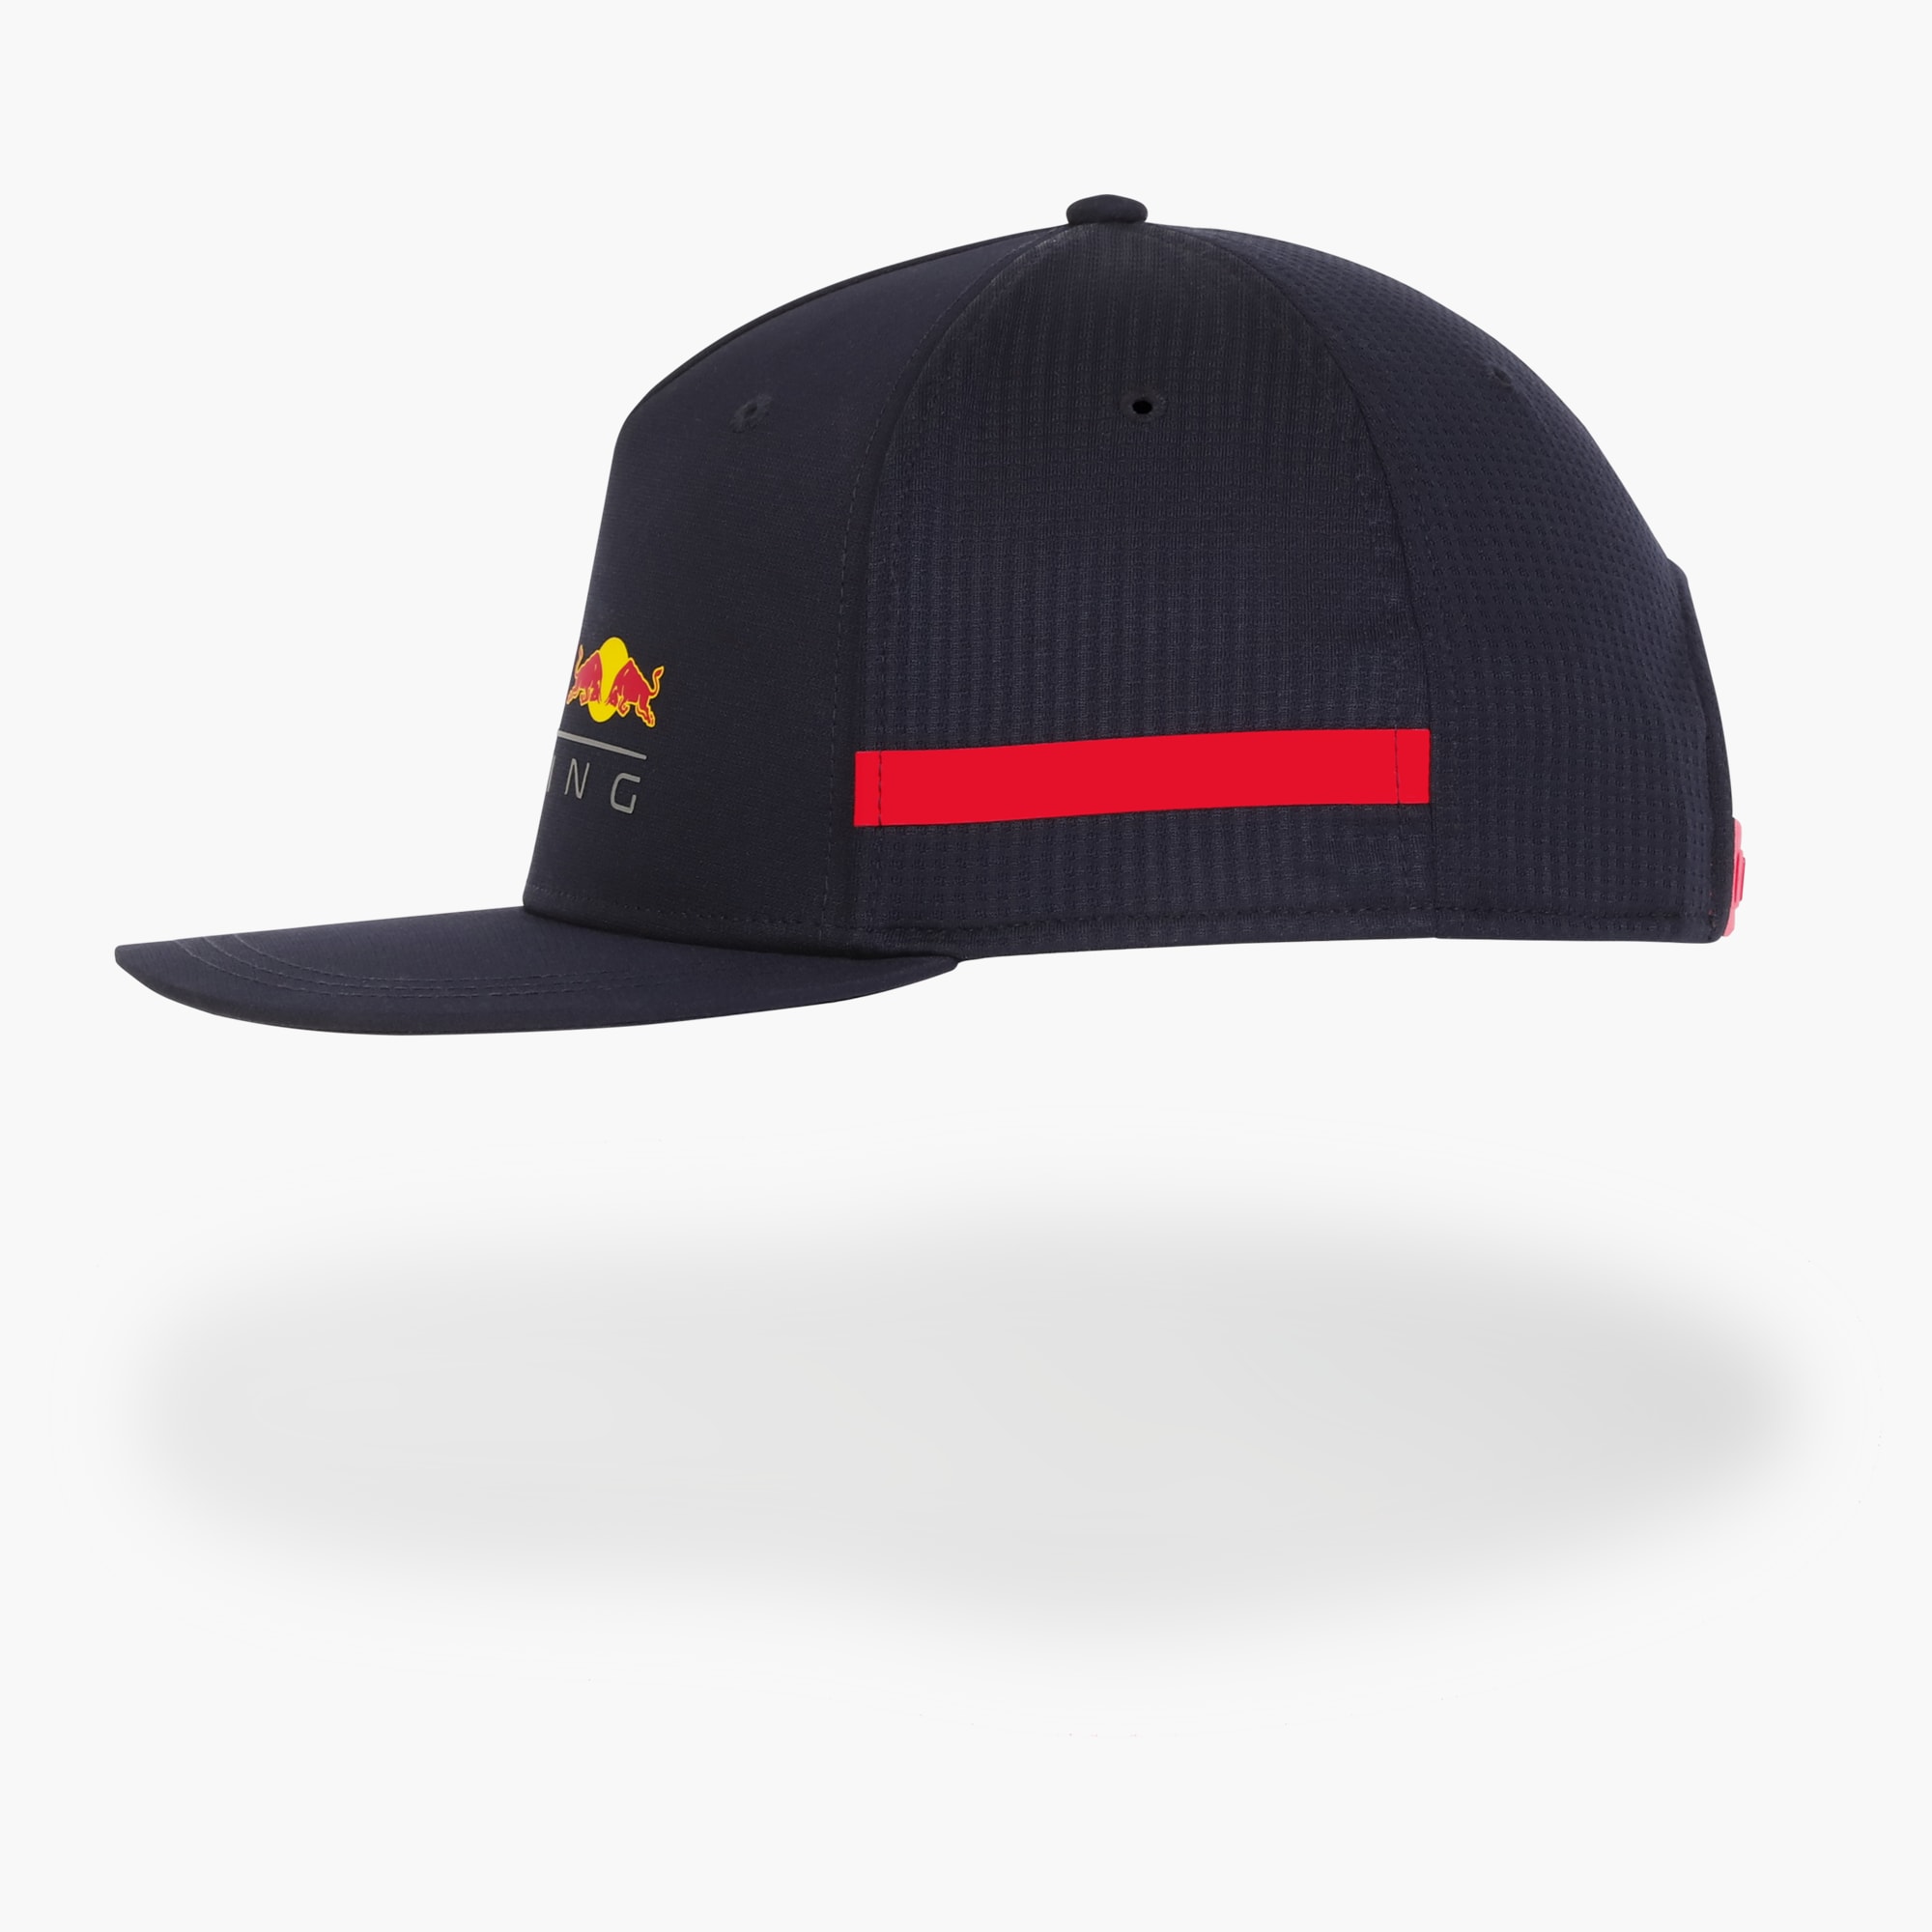 Oracle Red Bull Racing Shop: Stripe Flat Cap | only here at redbullshop.com